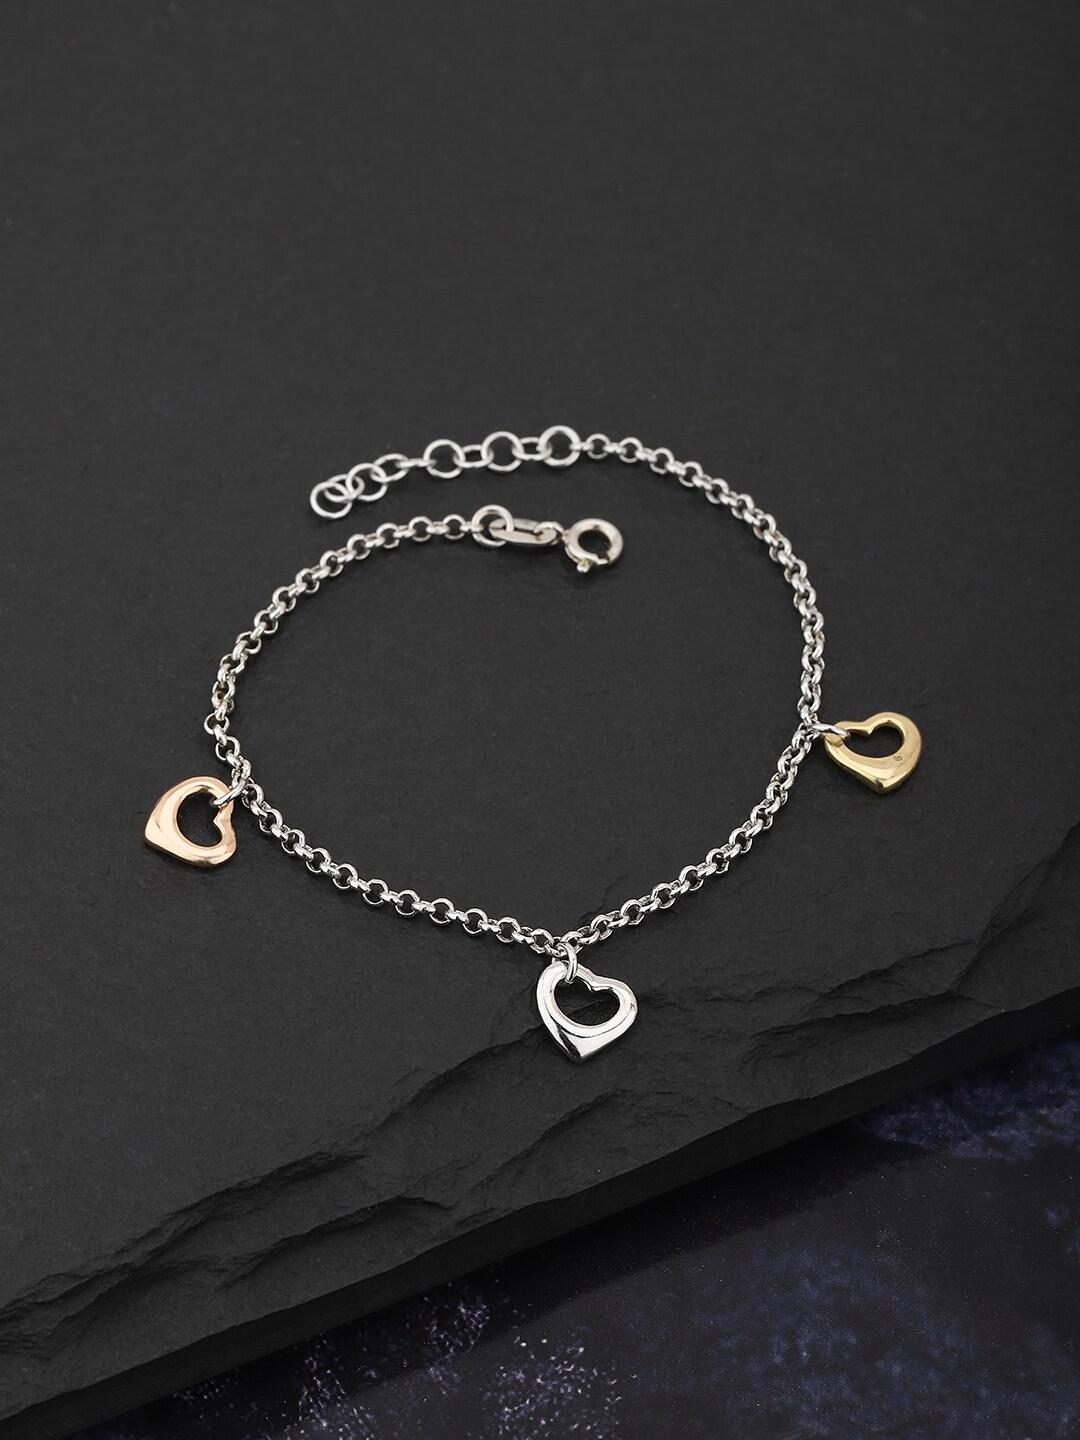 carlton-london-silver-toned-&-gold-toned-rhodium-plated-heart-shaped-charm-bracelet